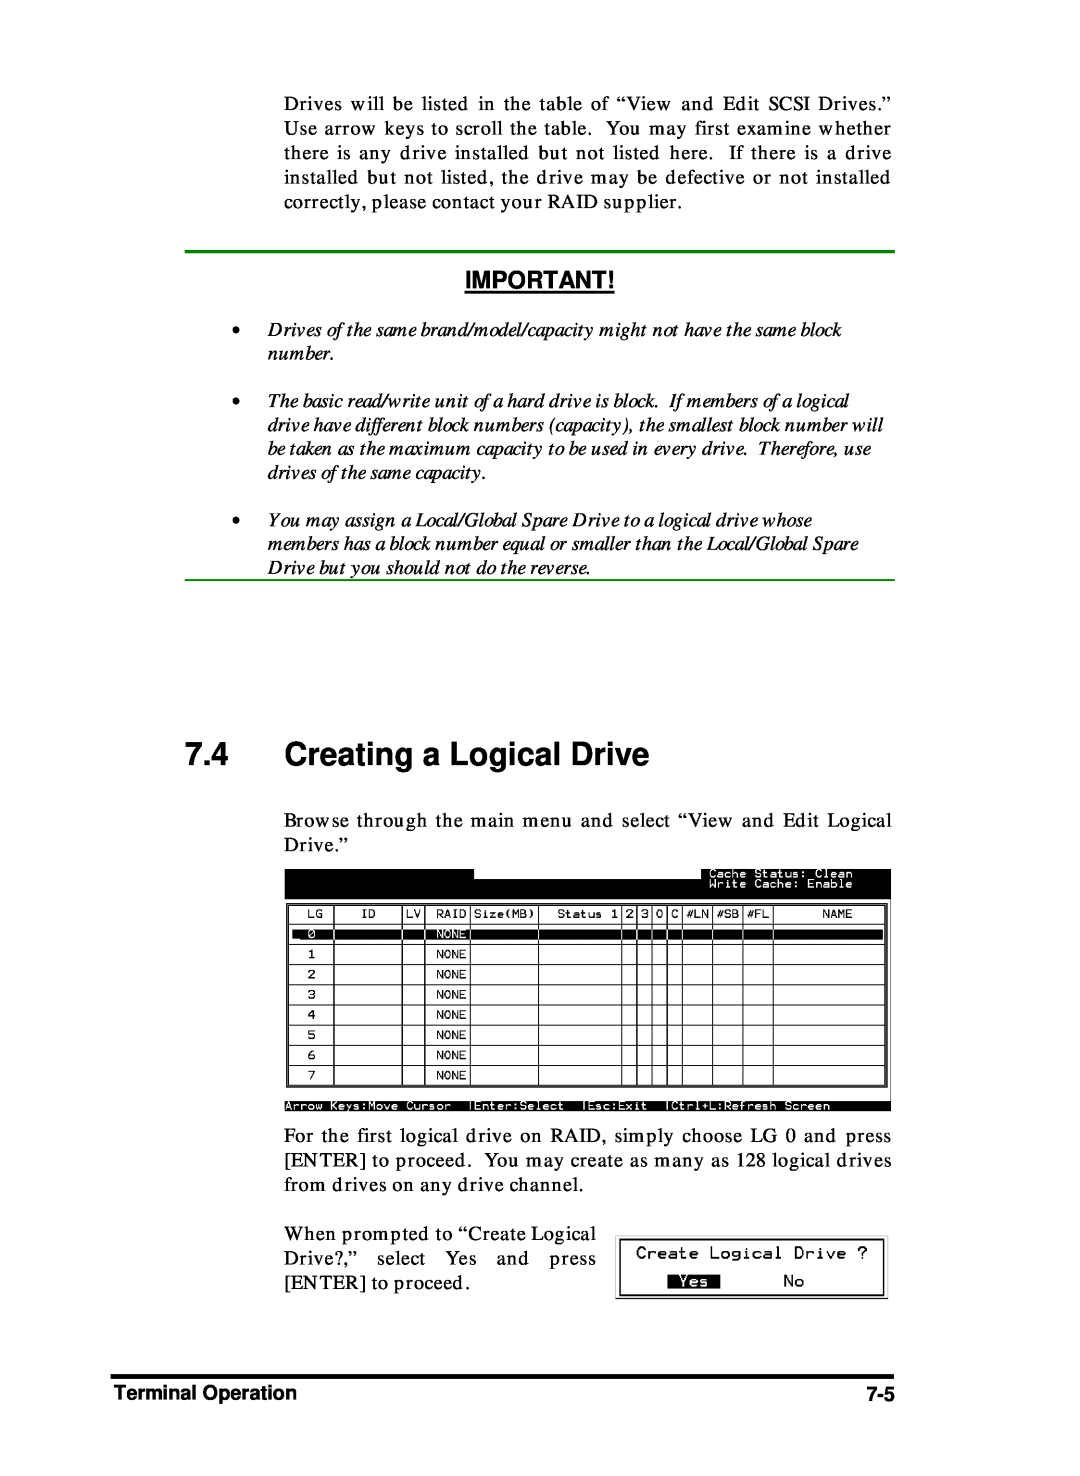 Compaq Infortrend manual Creating a Logical Drive 